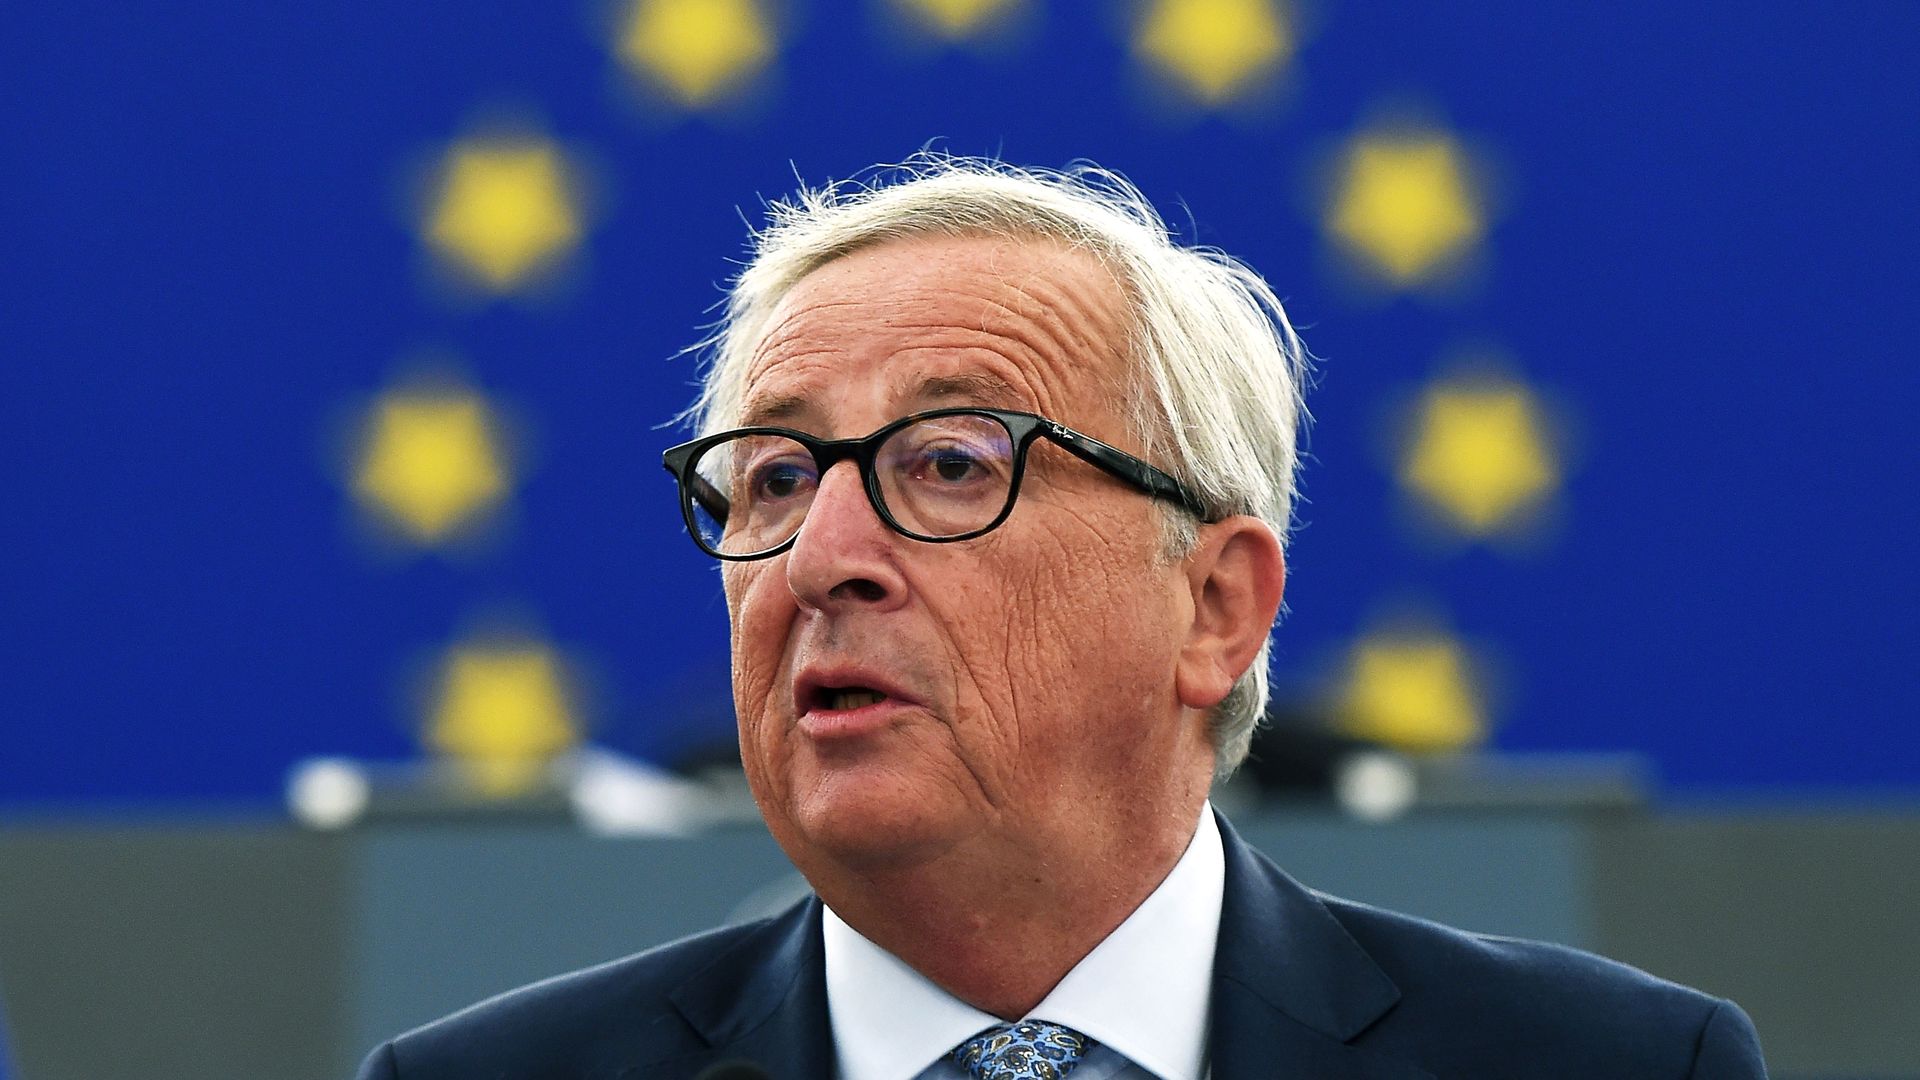 EU chief executive Jean-Claude Juncker